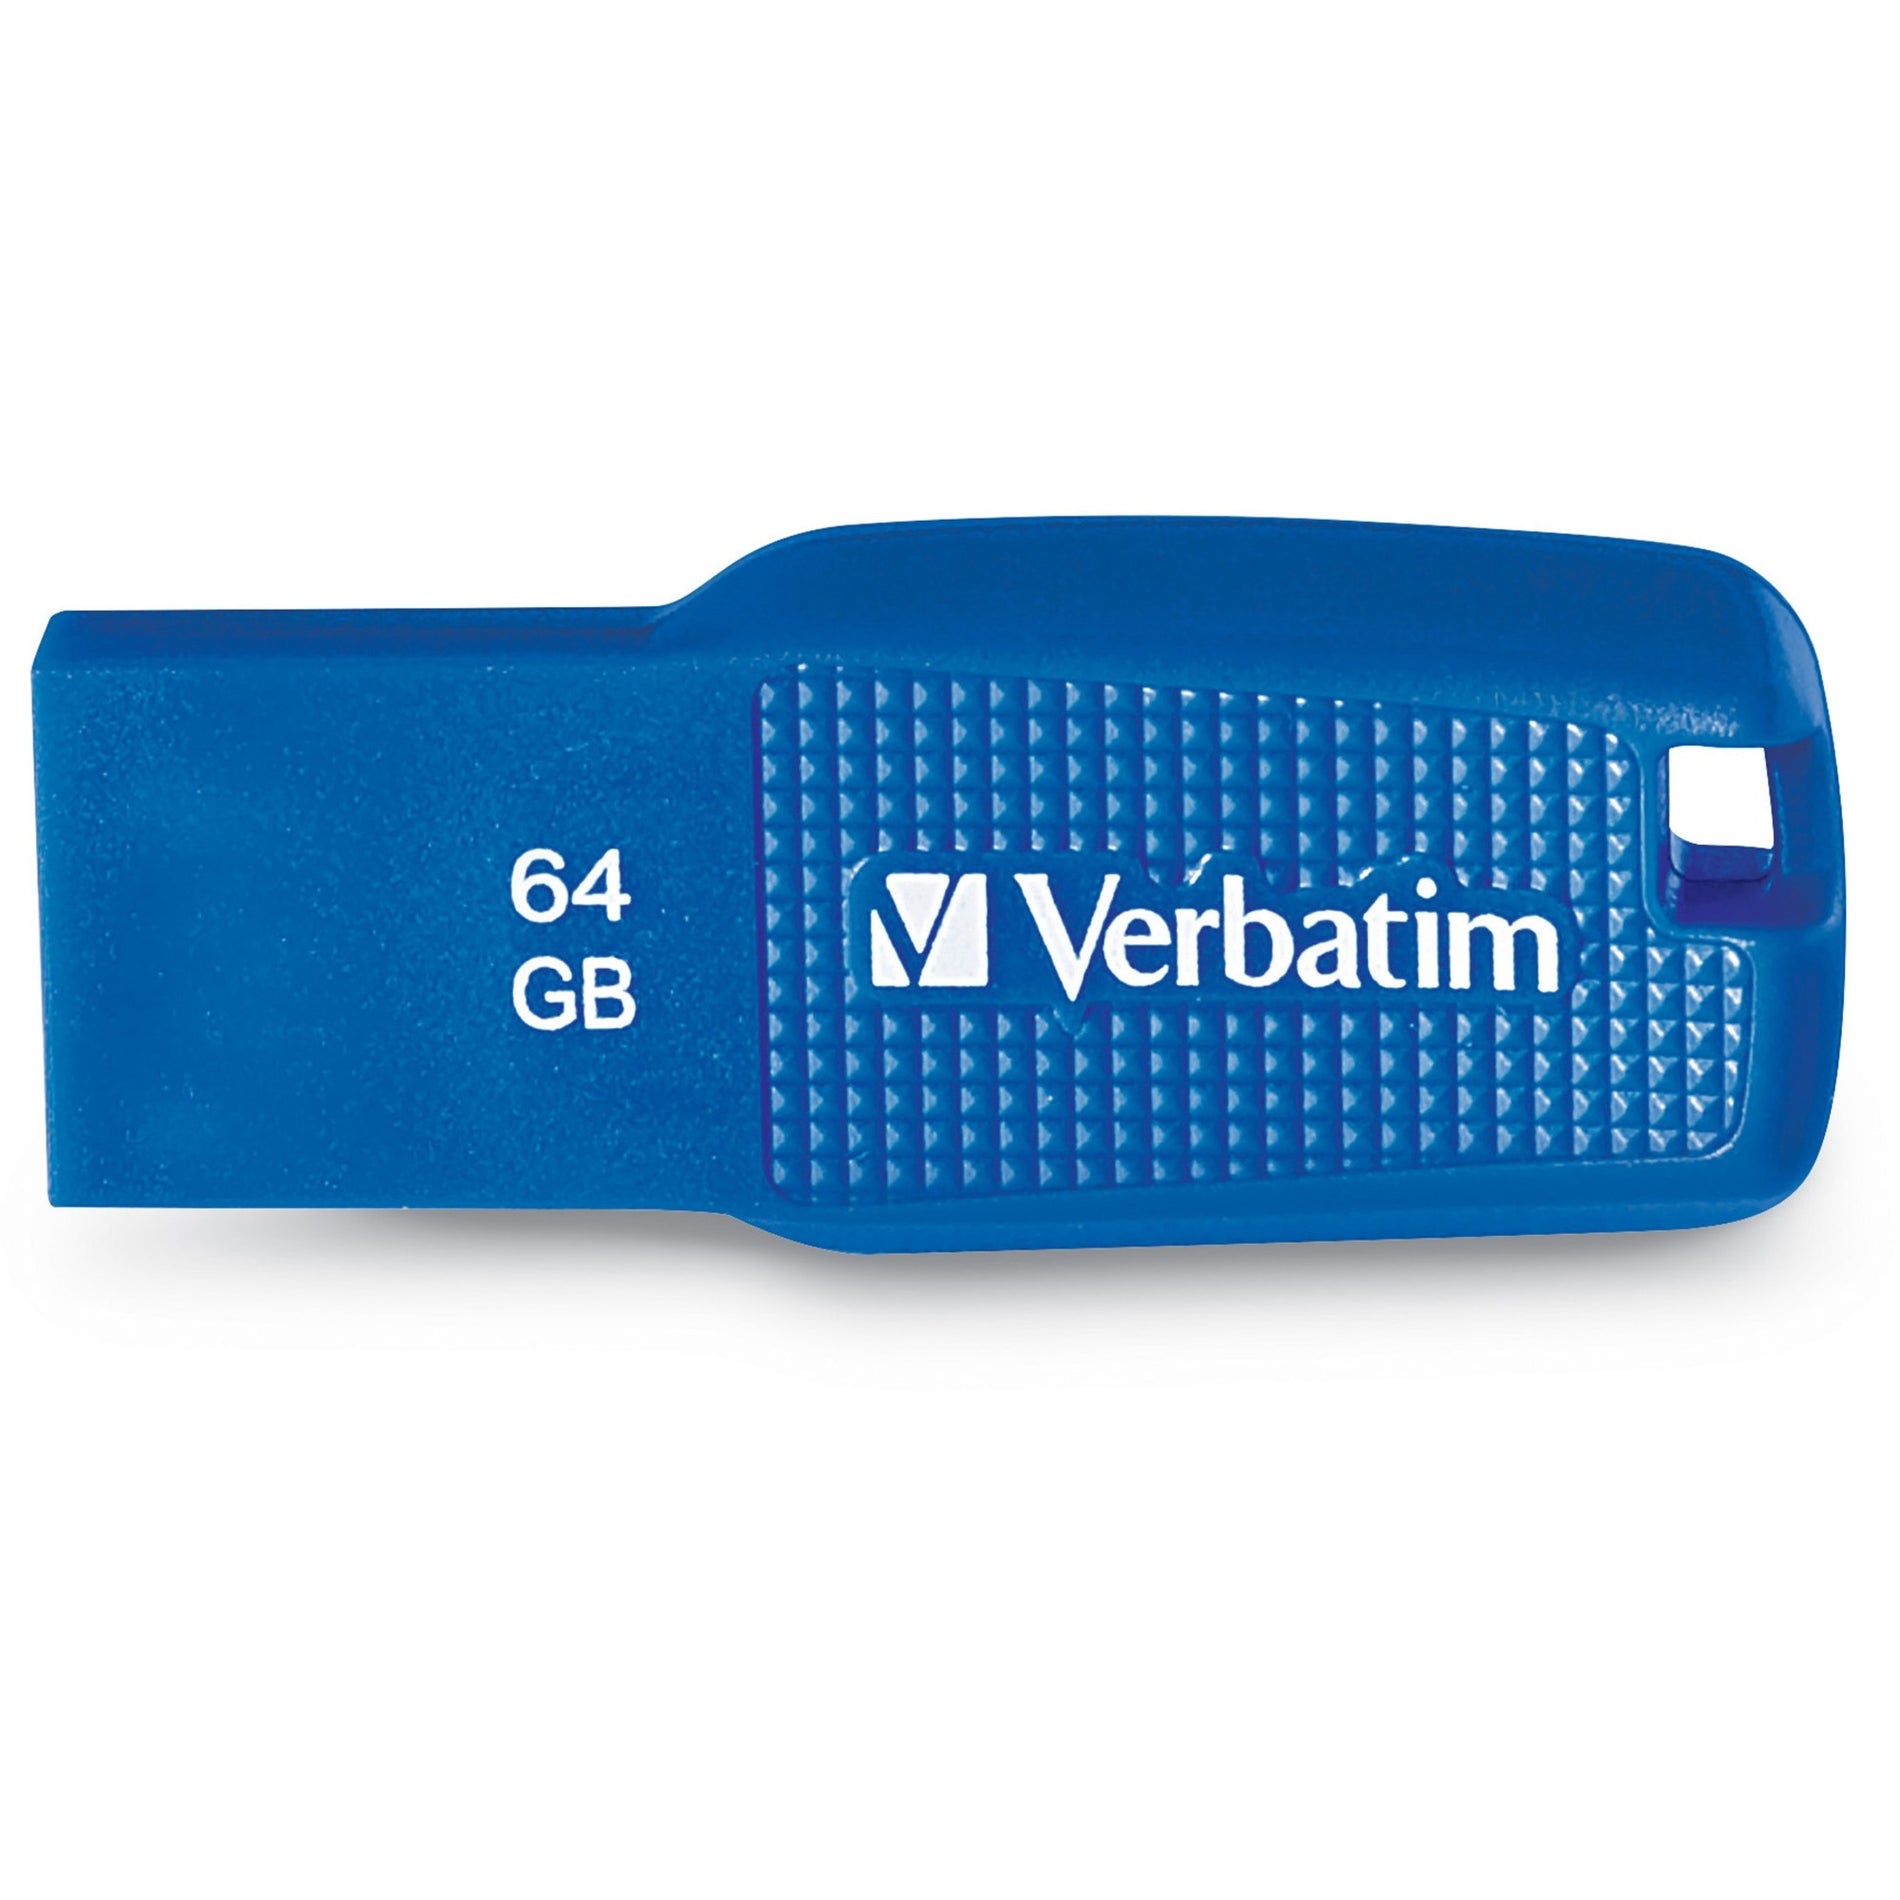 Verbatim 70879 64GB Ergo USB 3.0 Flash Drive - Blue, Capless, Password Protection